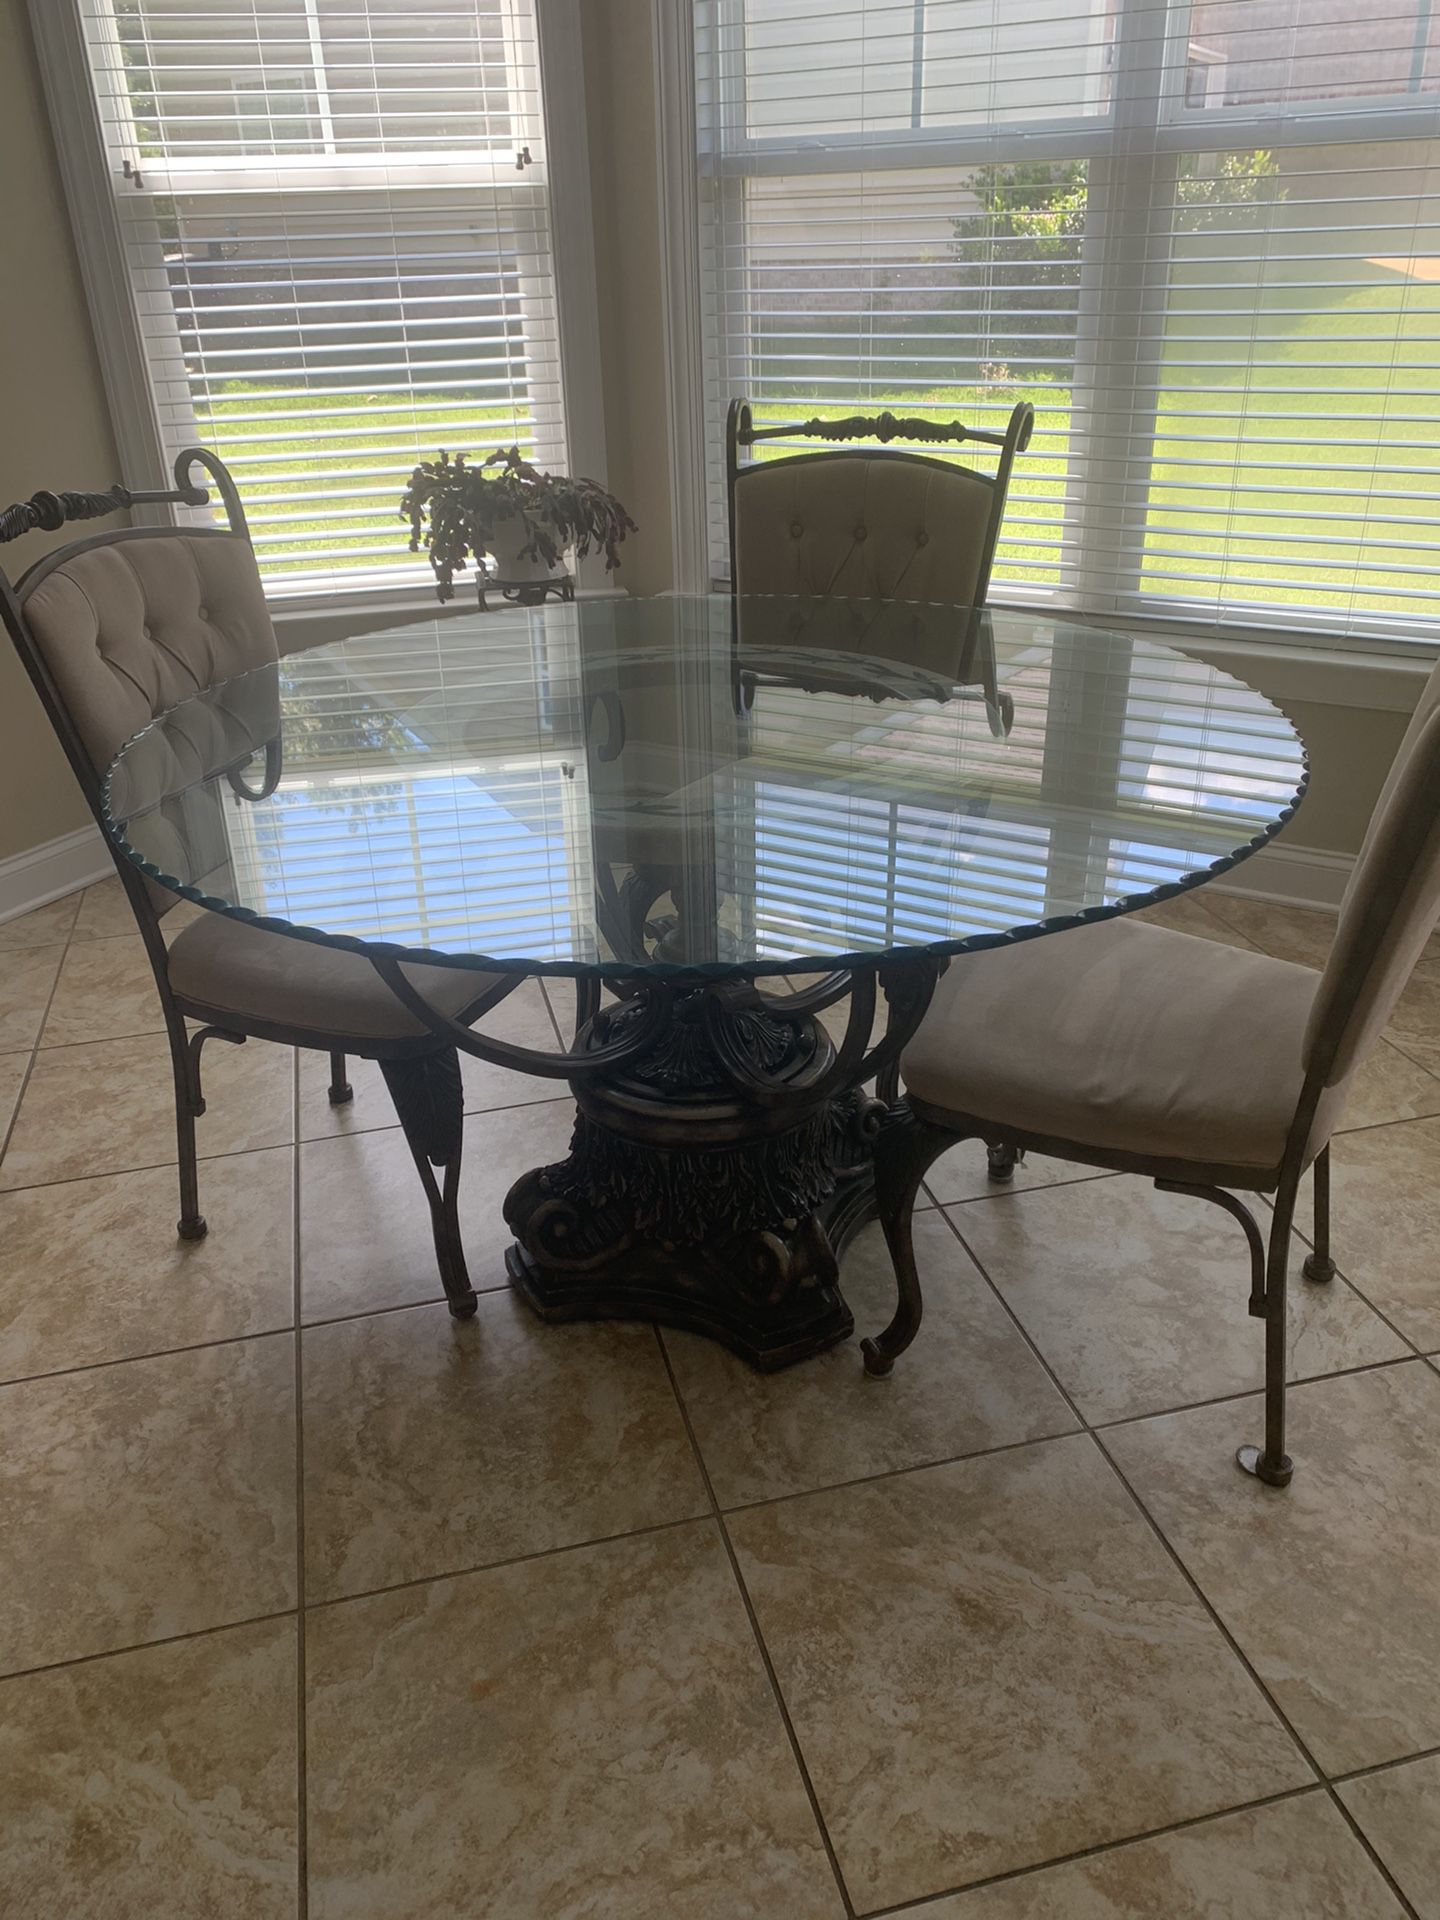 Glass kitchen table set